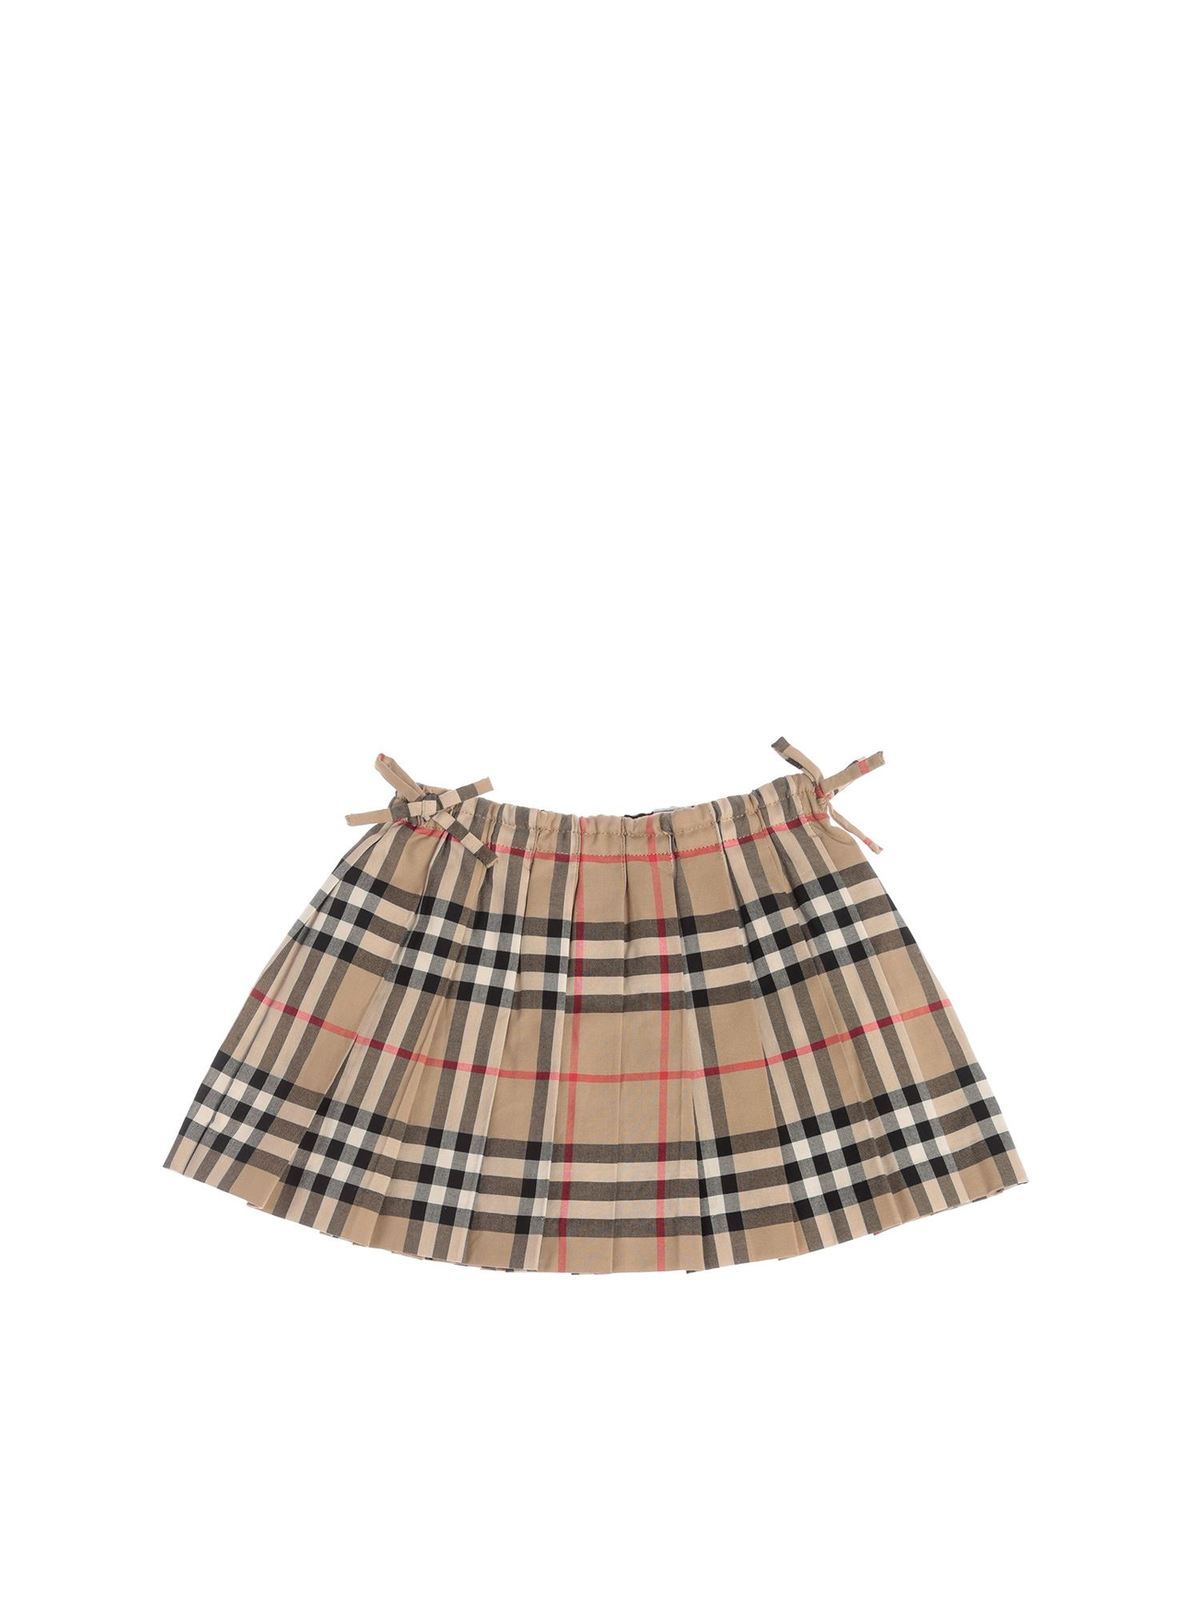 burberry skirt mini